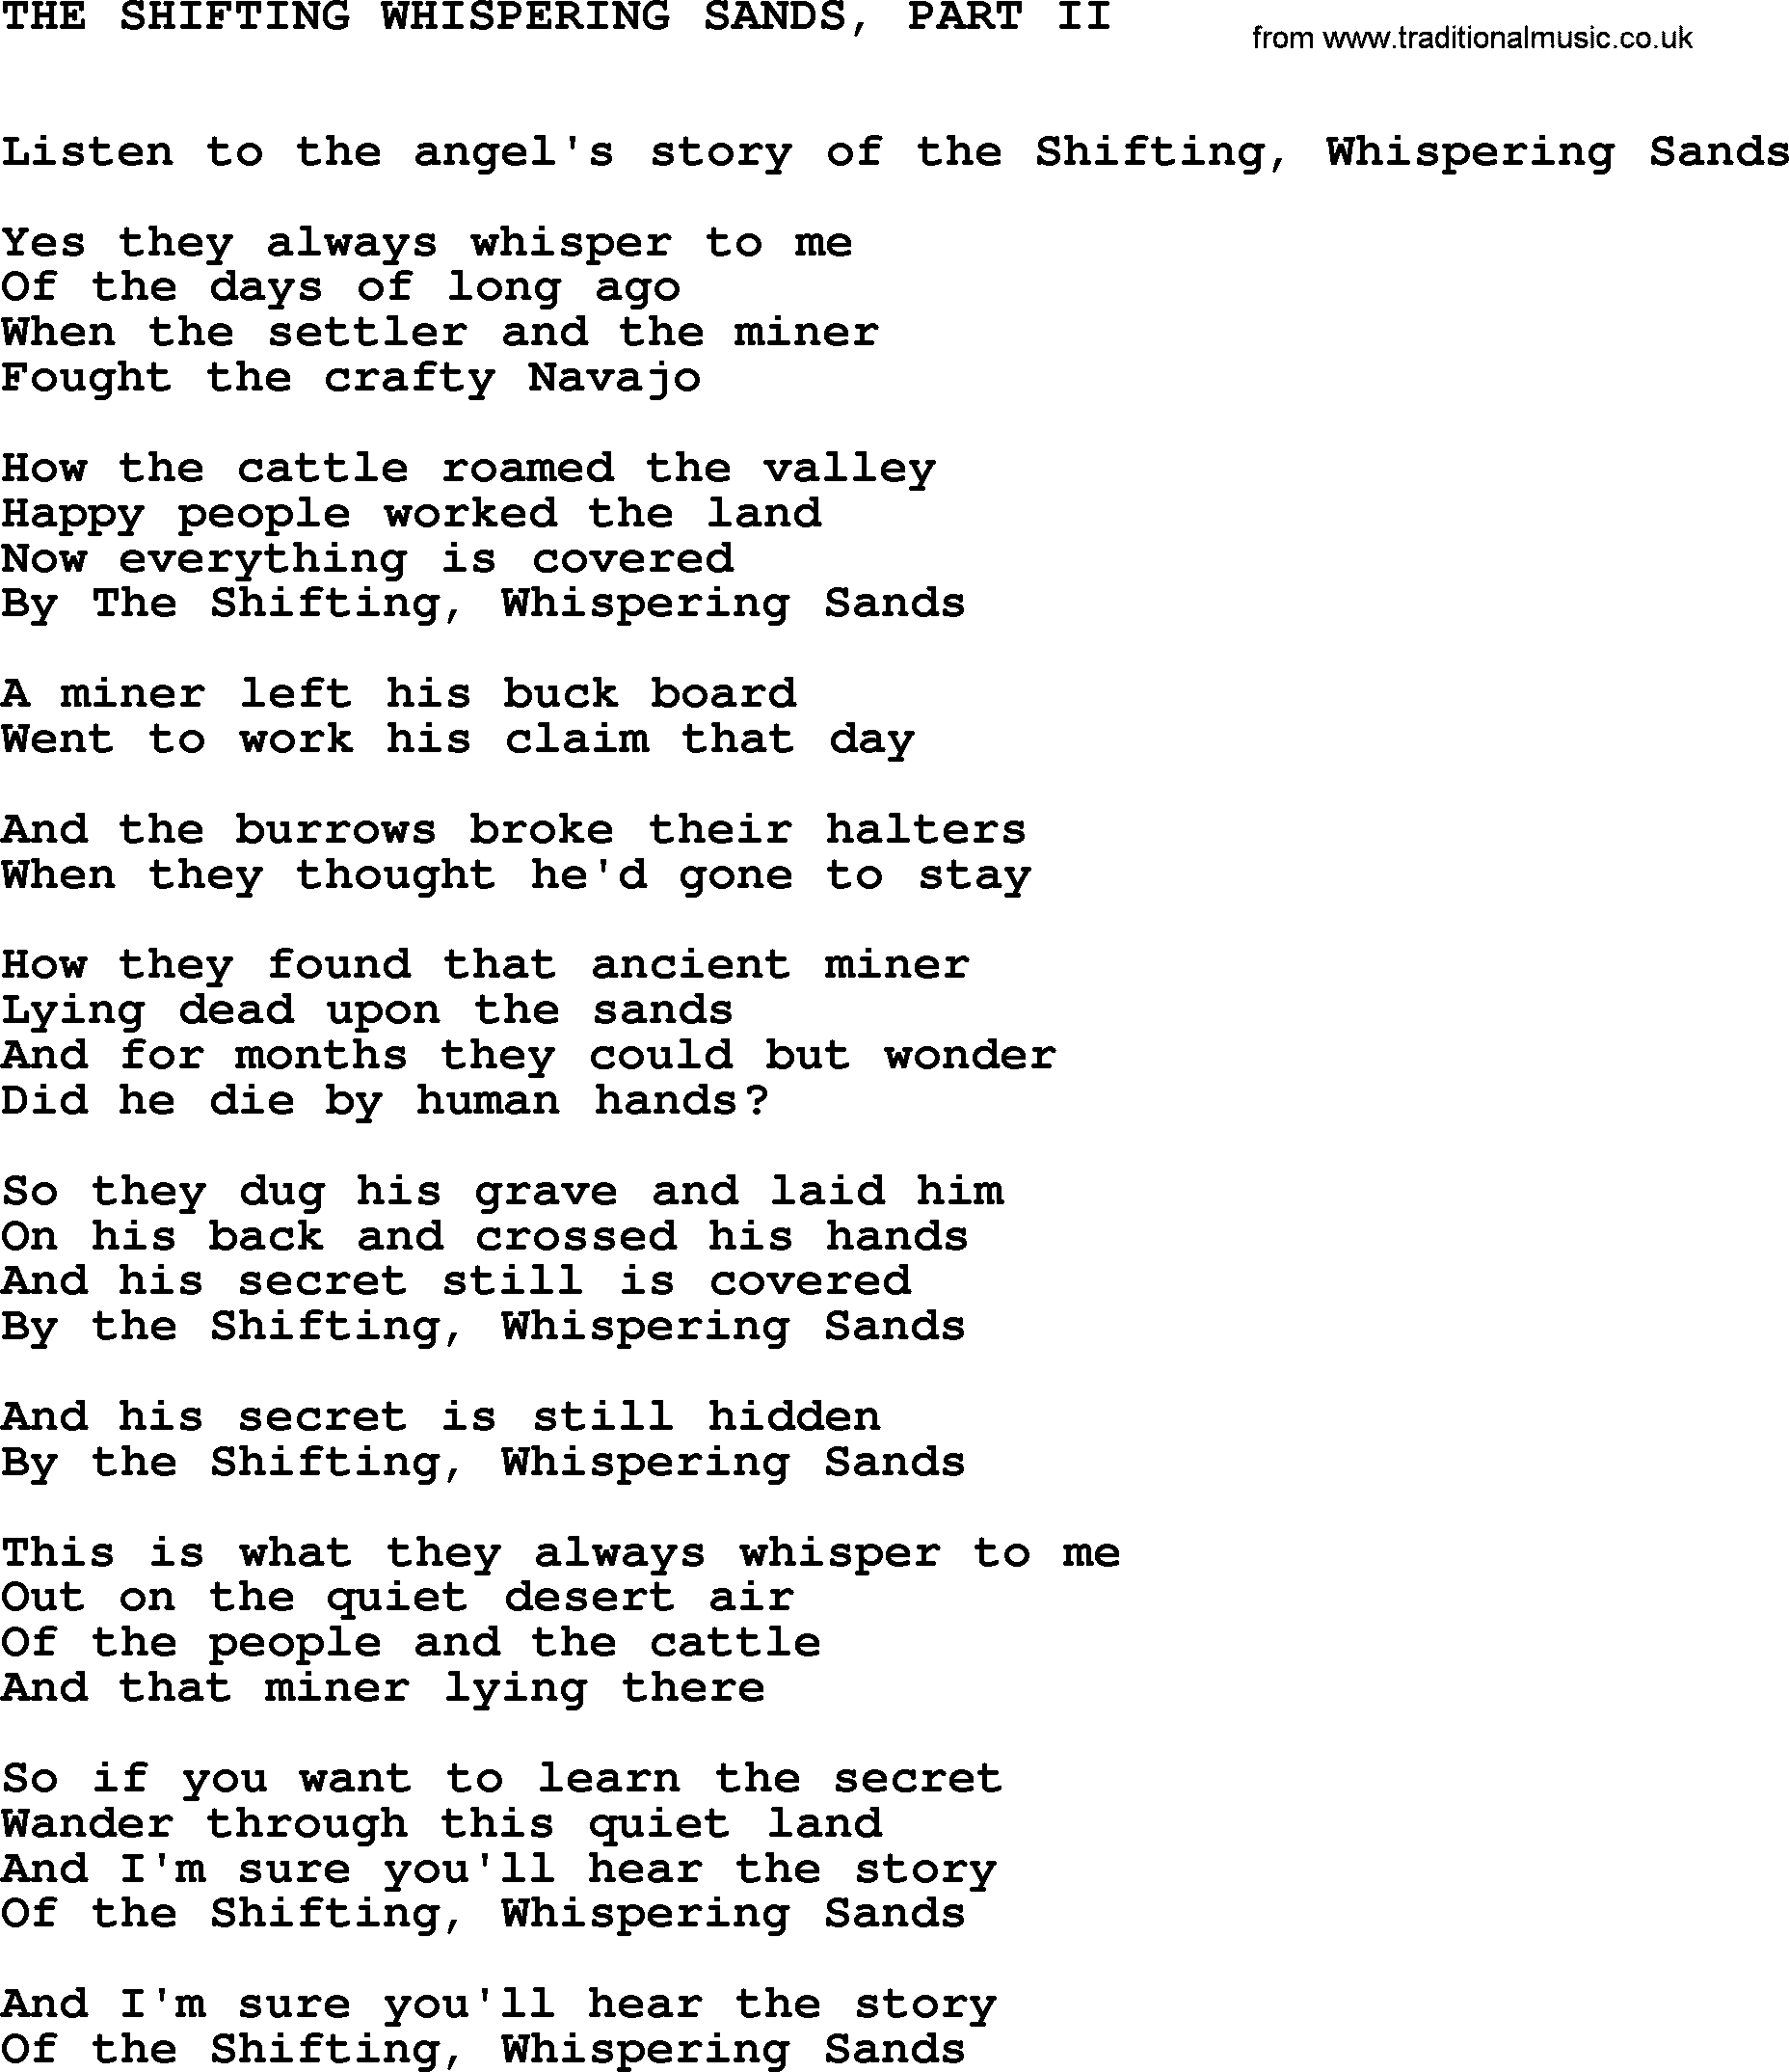 Johnny Cash song The Shifting Whispering Sands, Part Ii.txt lyrics